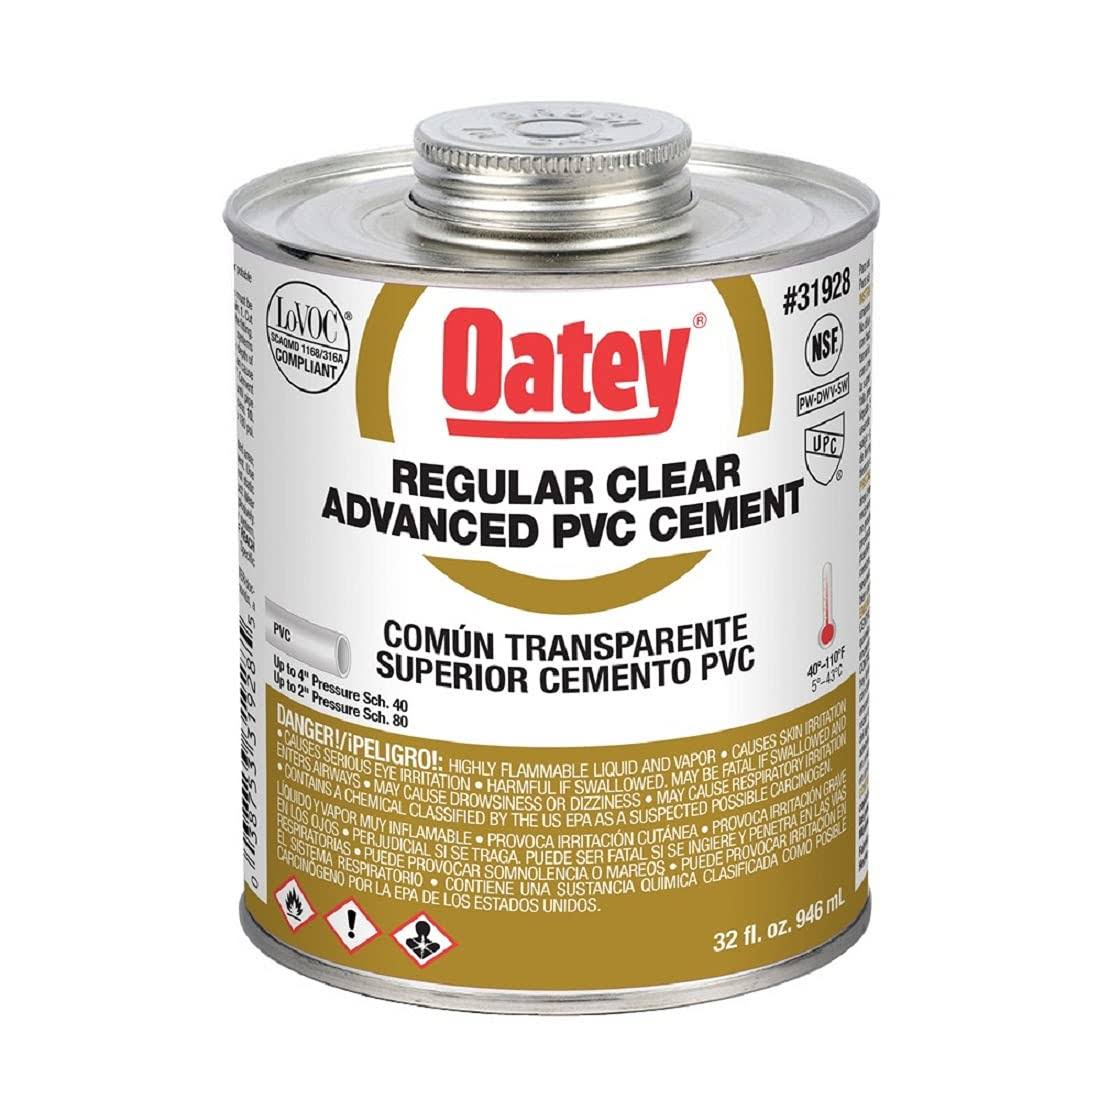 Oatey 31928 32 oz PVC Cement Regular Clear Advanced